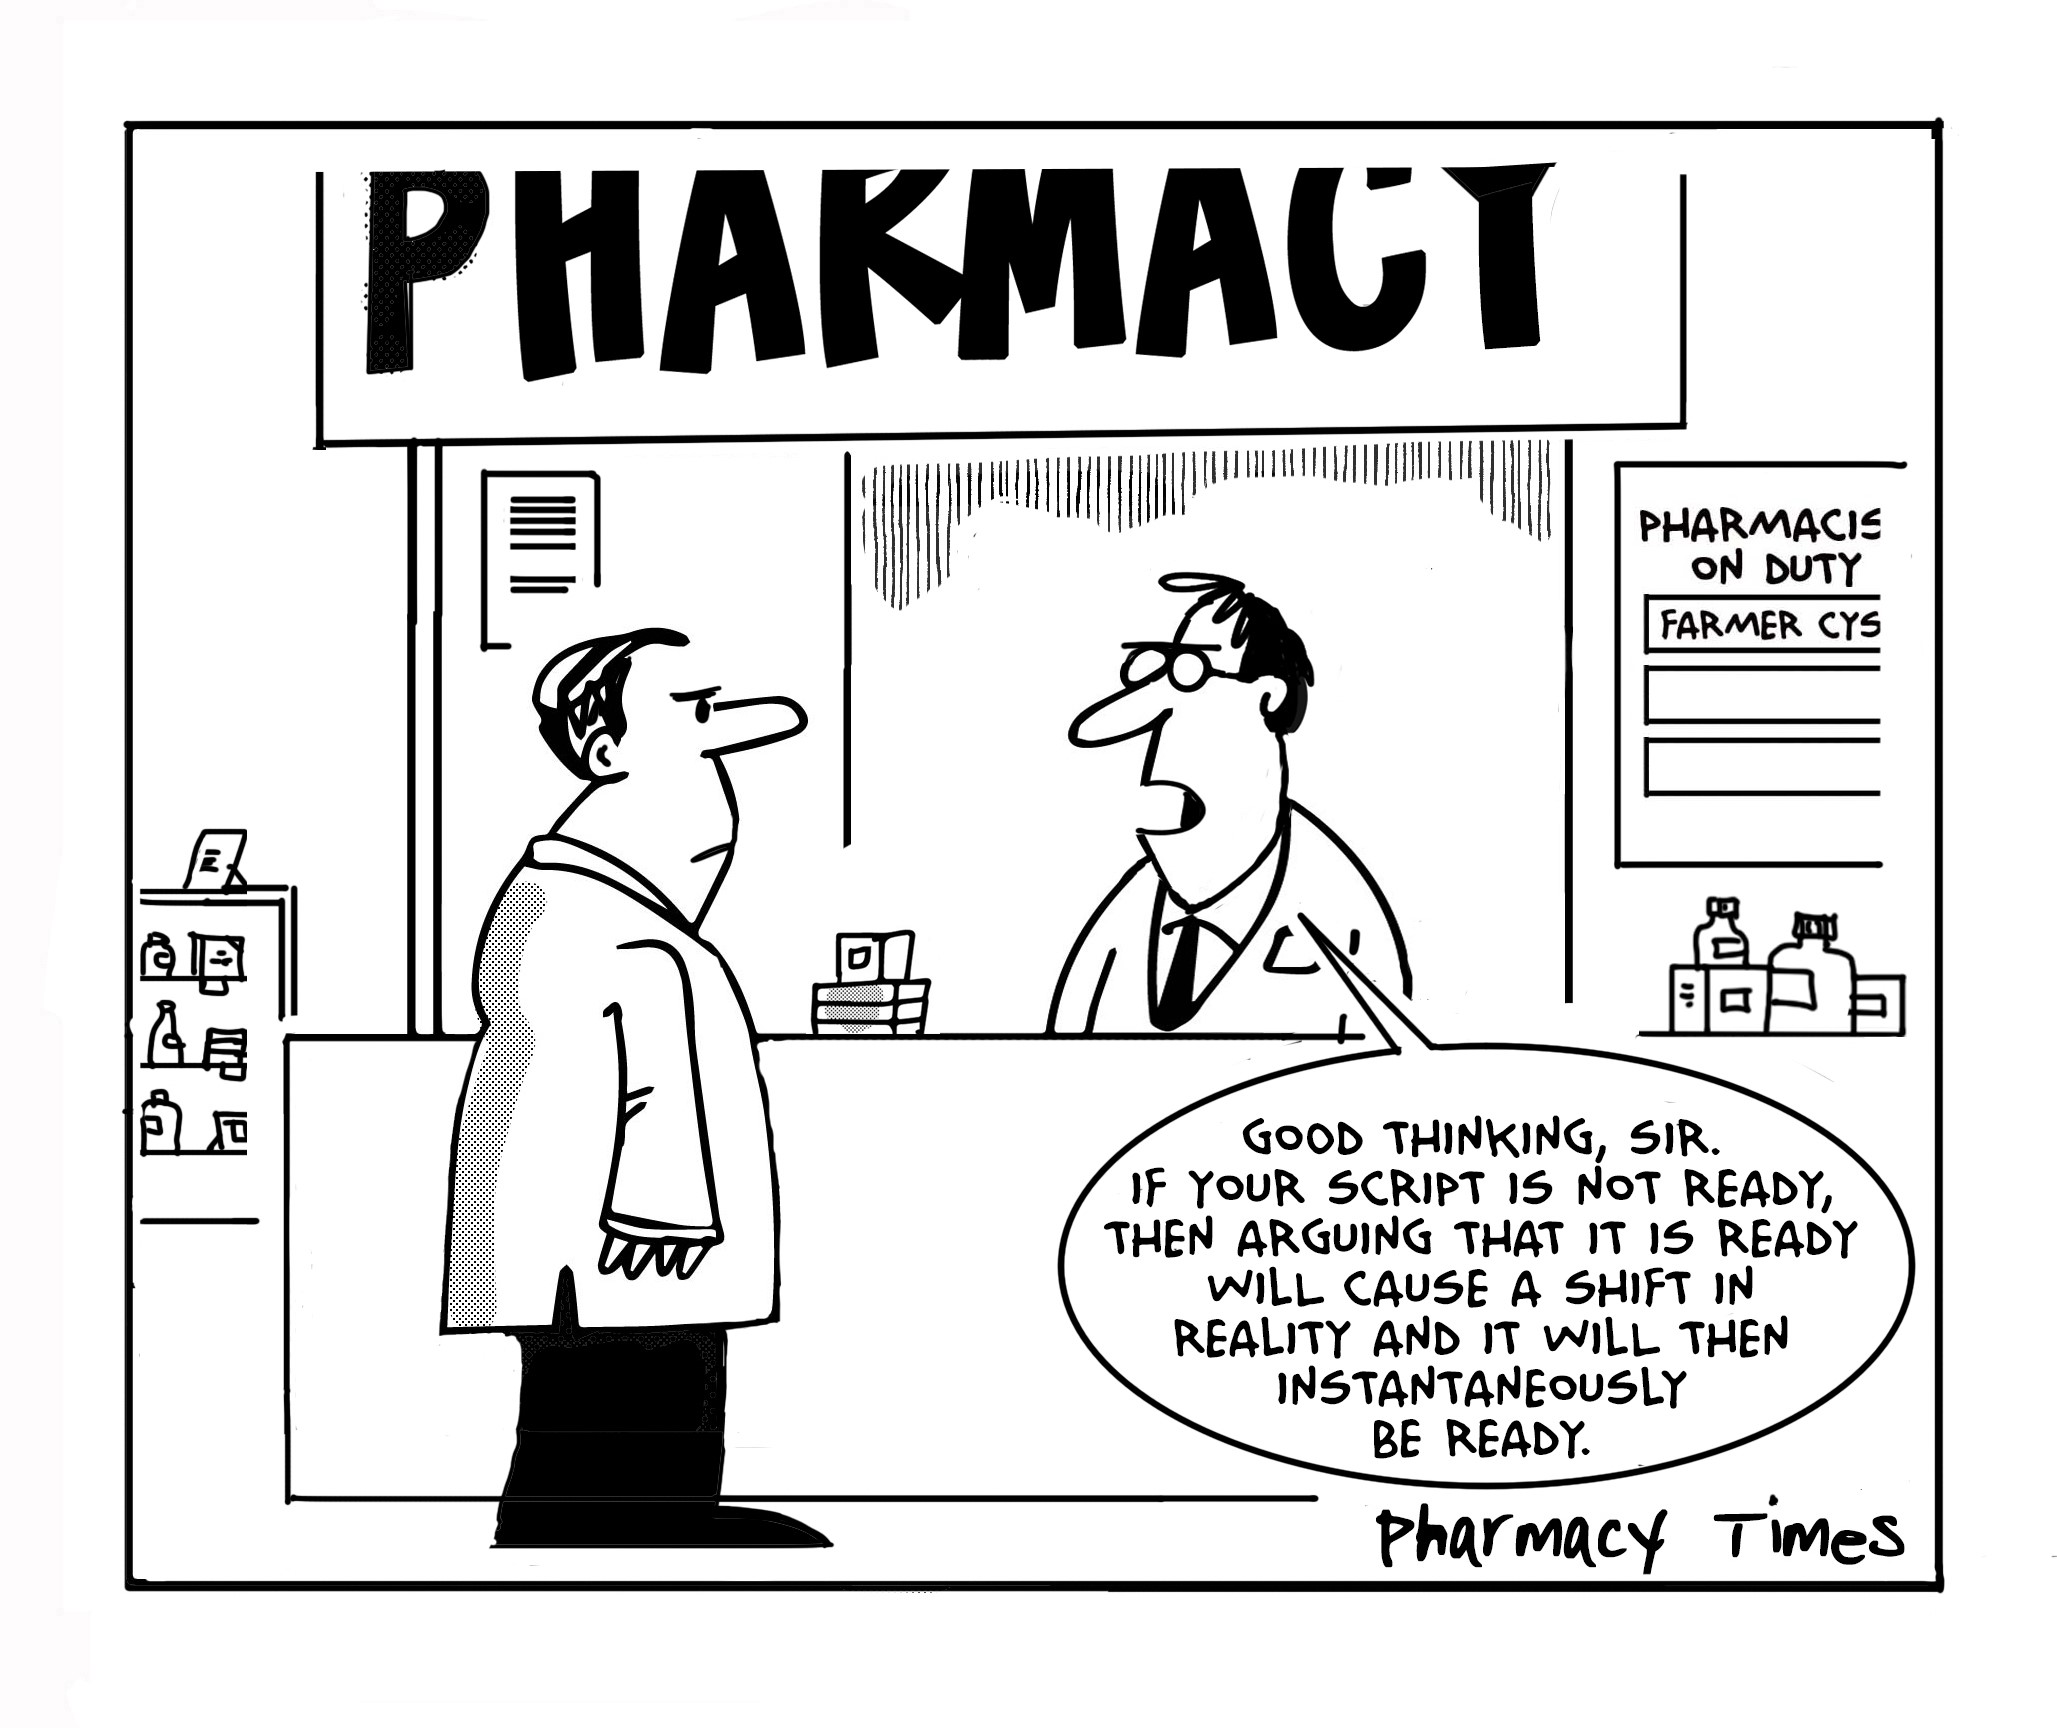 Farmer Cyst - Customer logic... - The Pharmacy Times